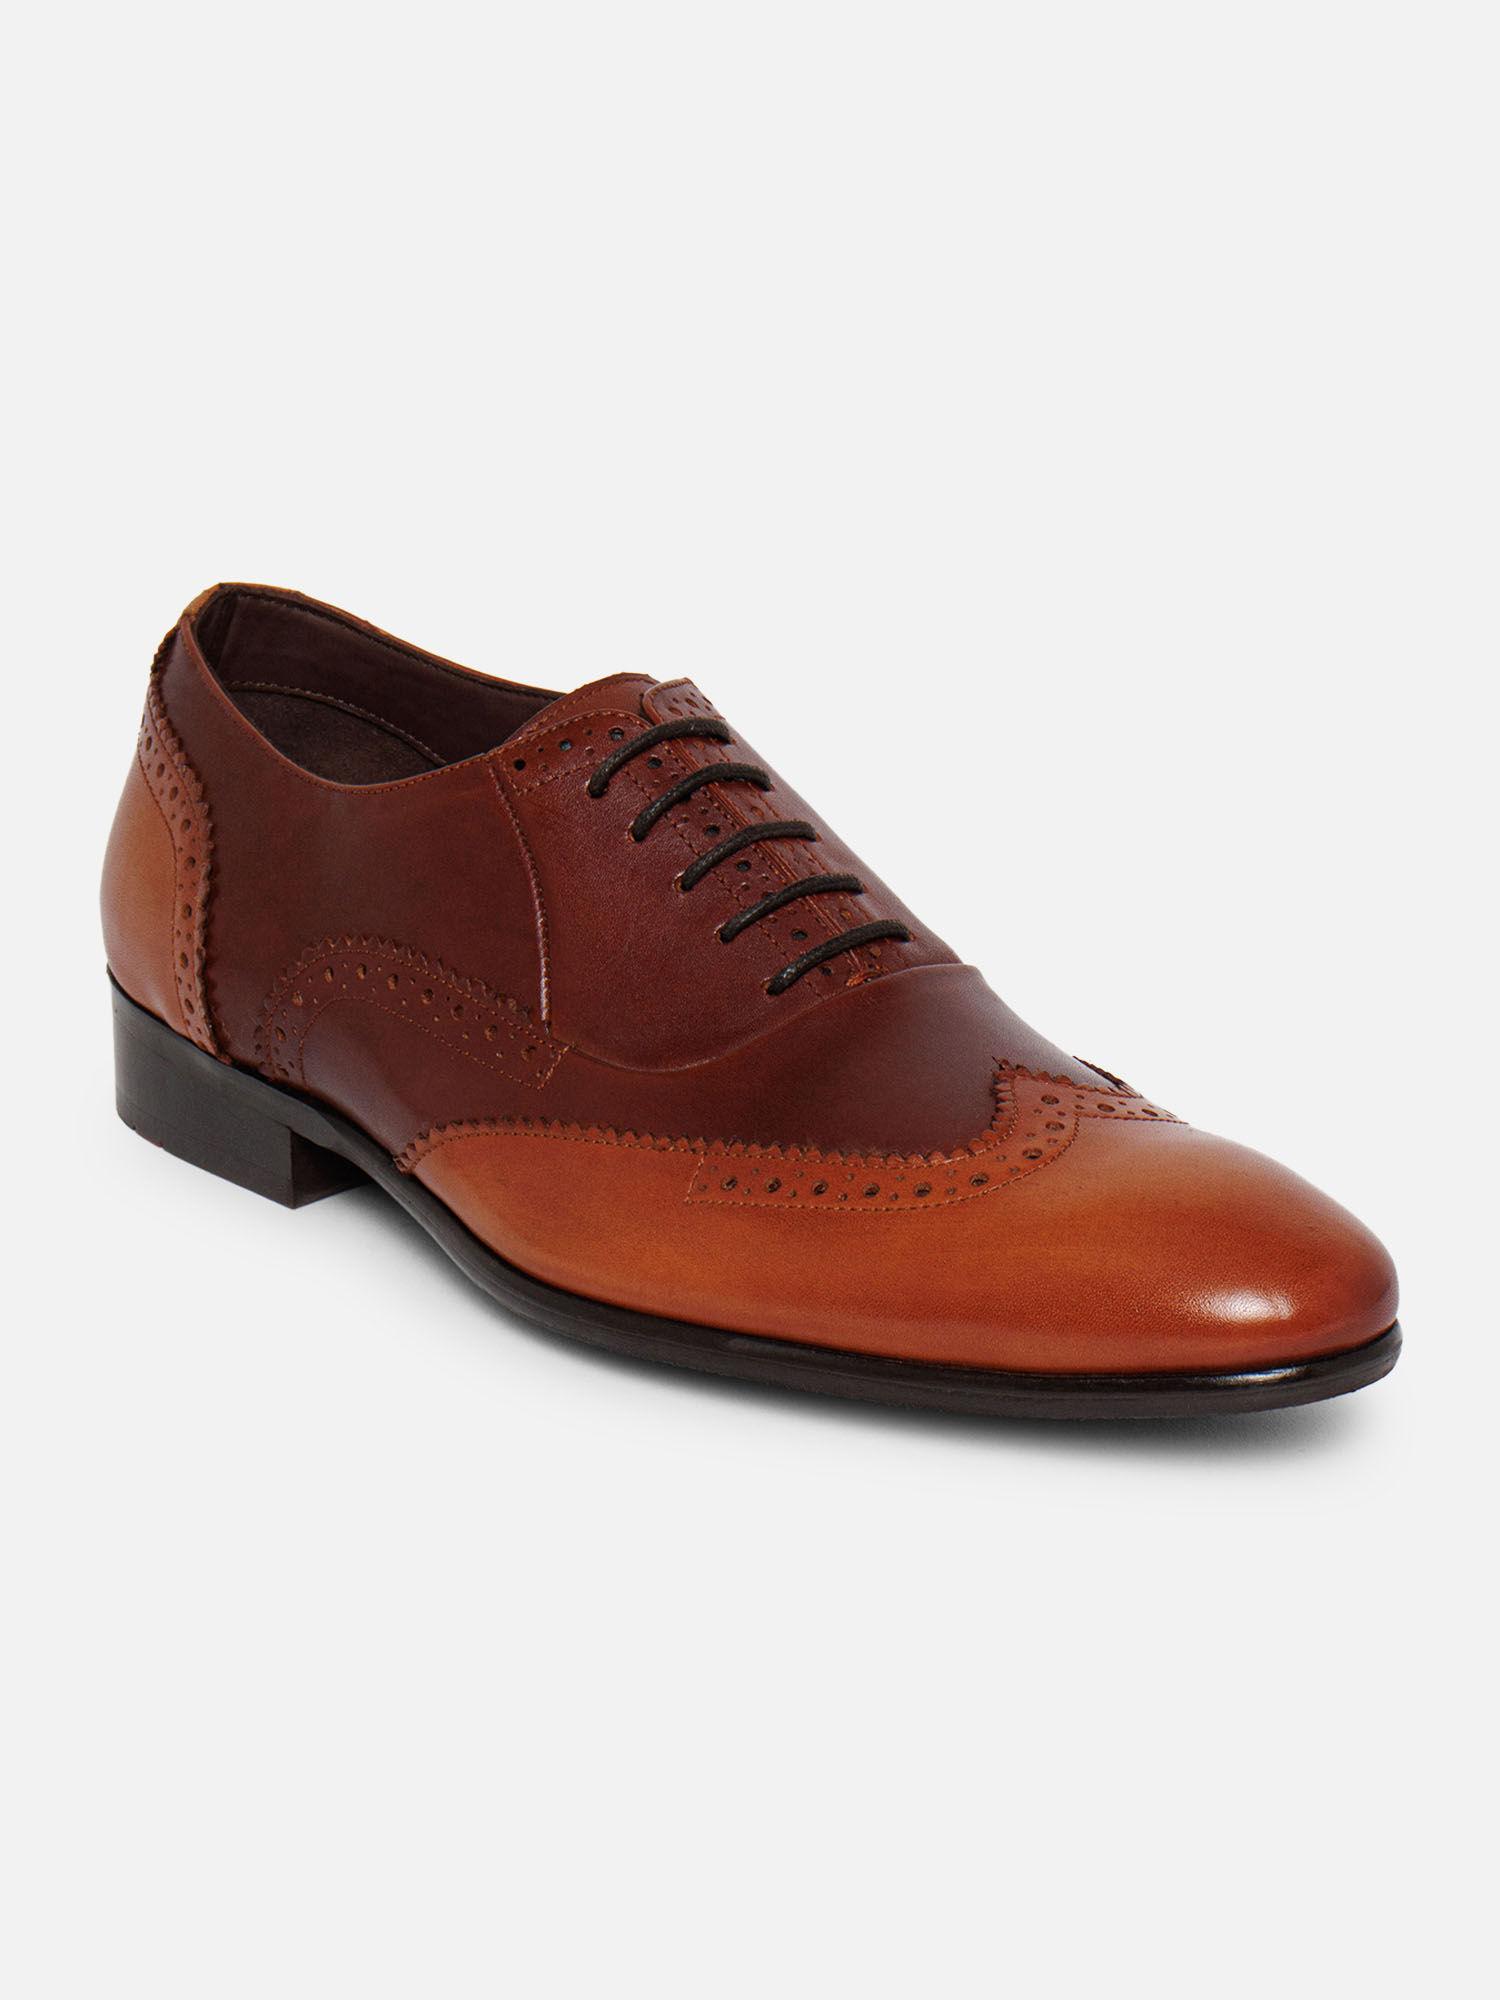 leather oxfords formal shoes for men